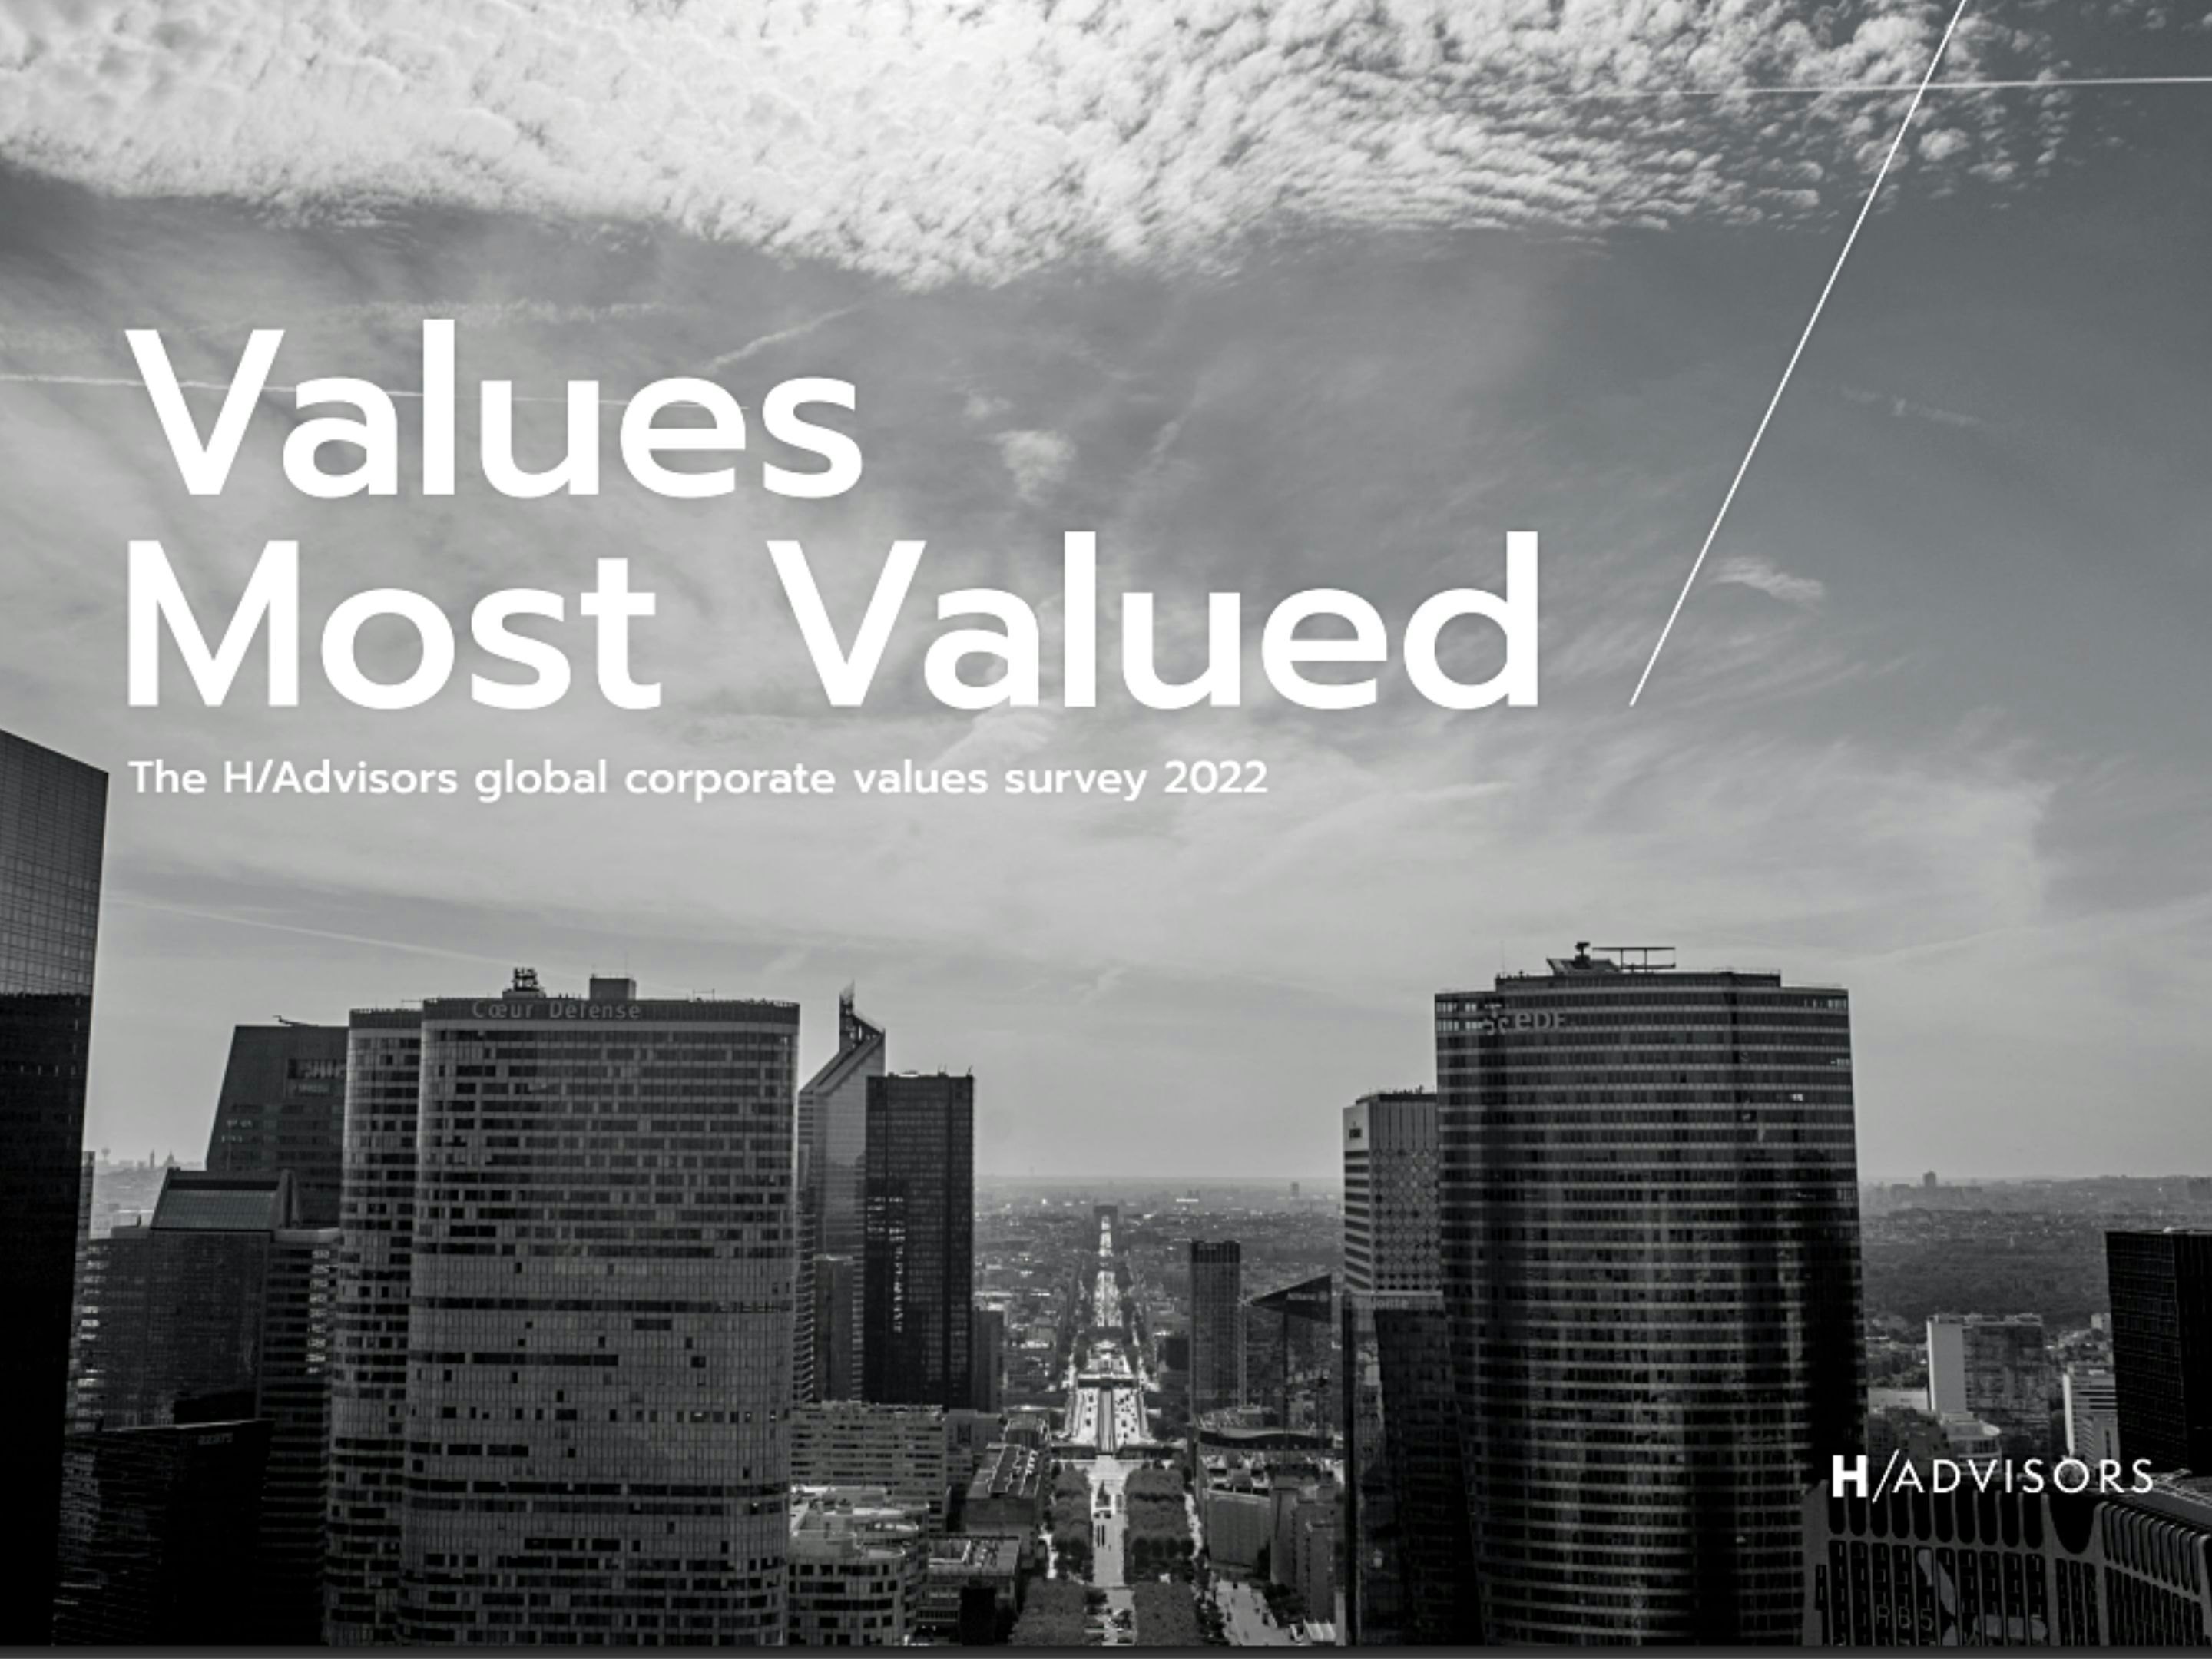 The H/advisors global corporate value survey 2022